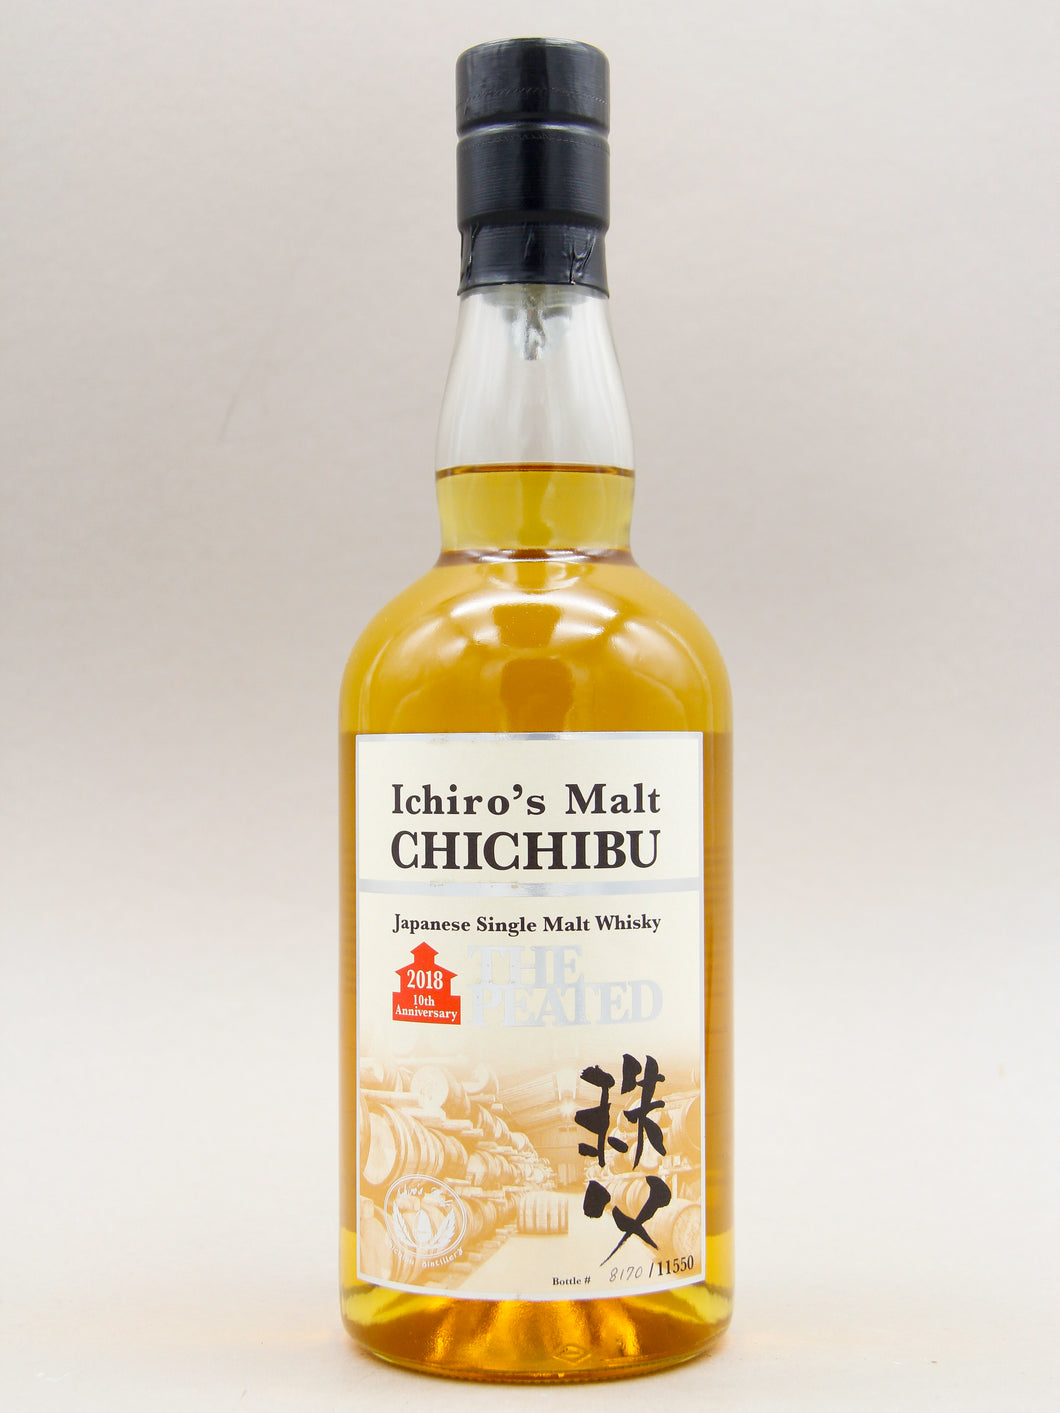 Chichibu, The Peated 2018, Japanese Single Malt Whisky (55,5%, 70cl)